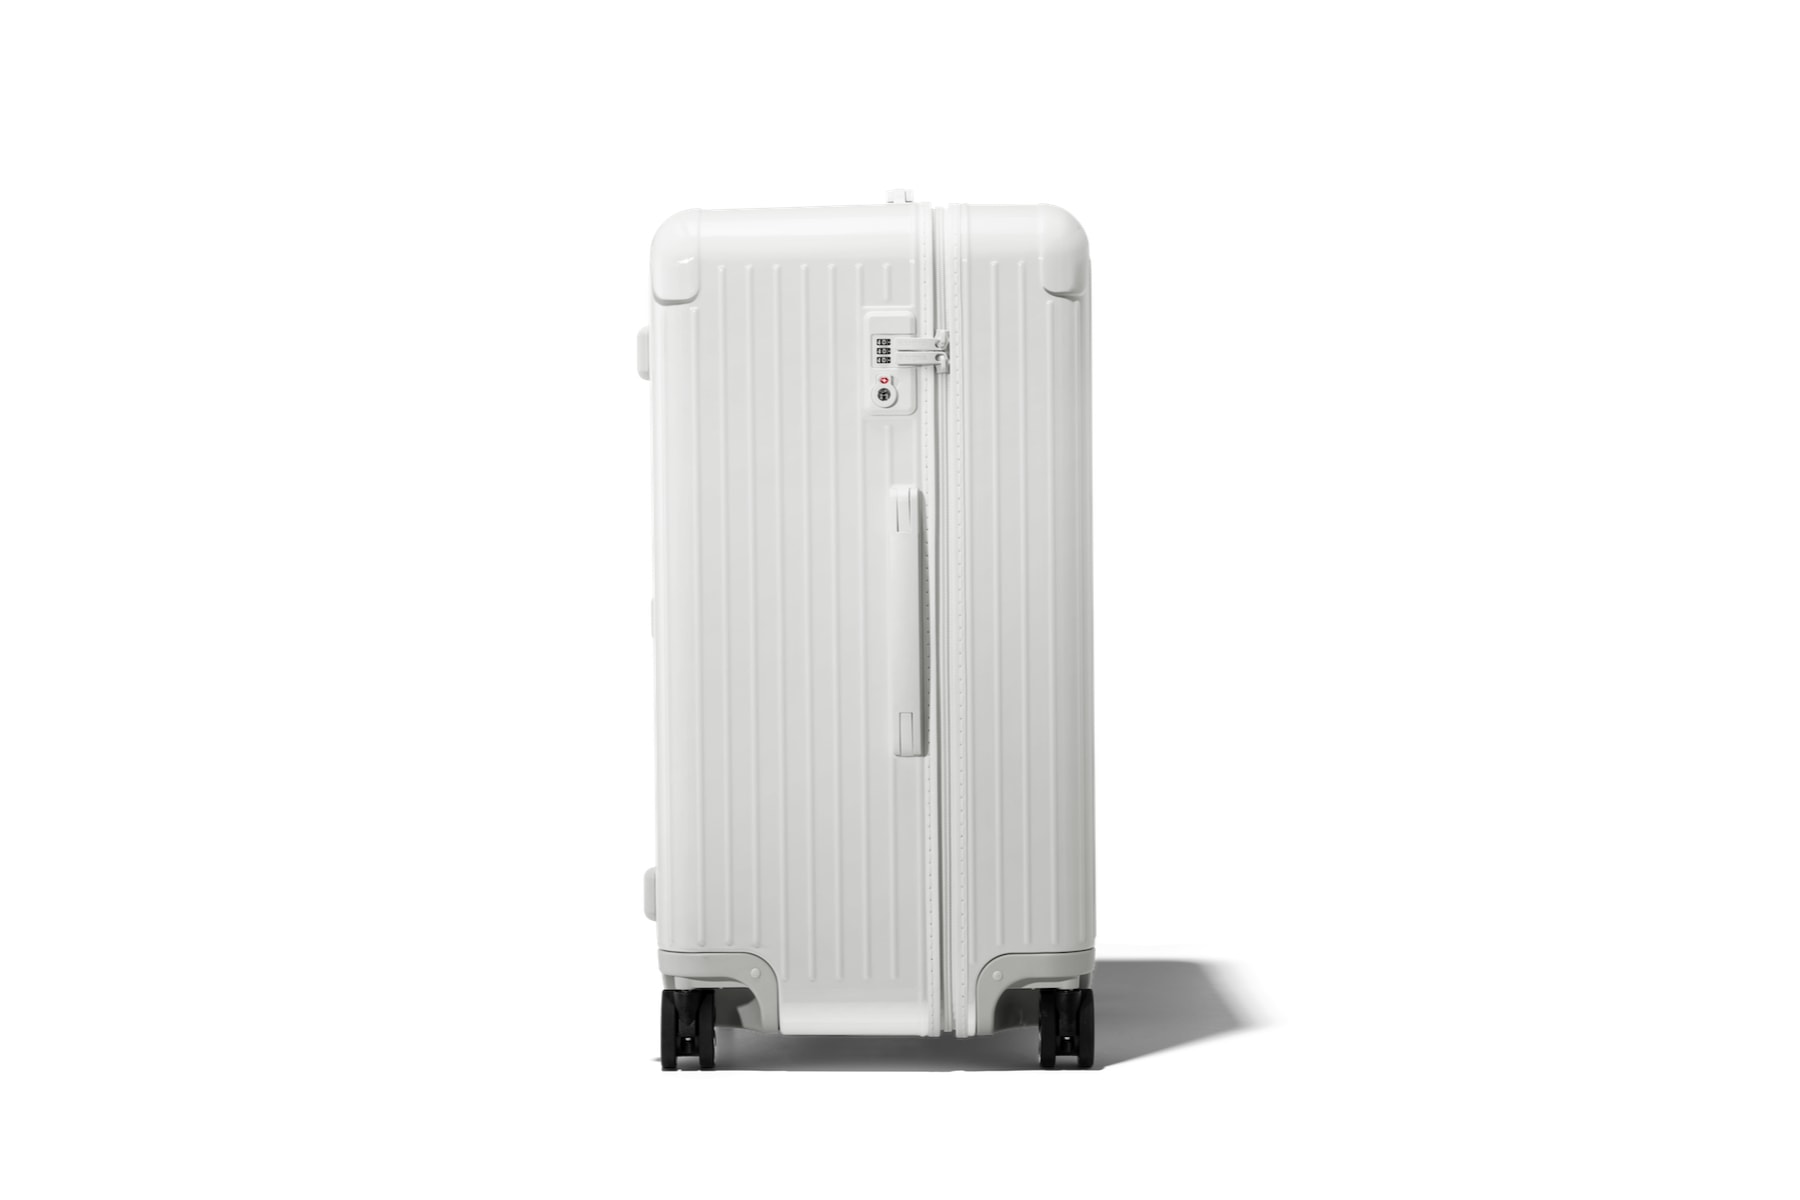 Off-White™ x RIMOWA 聯乘行李箱正式發布